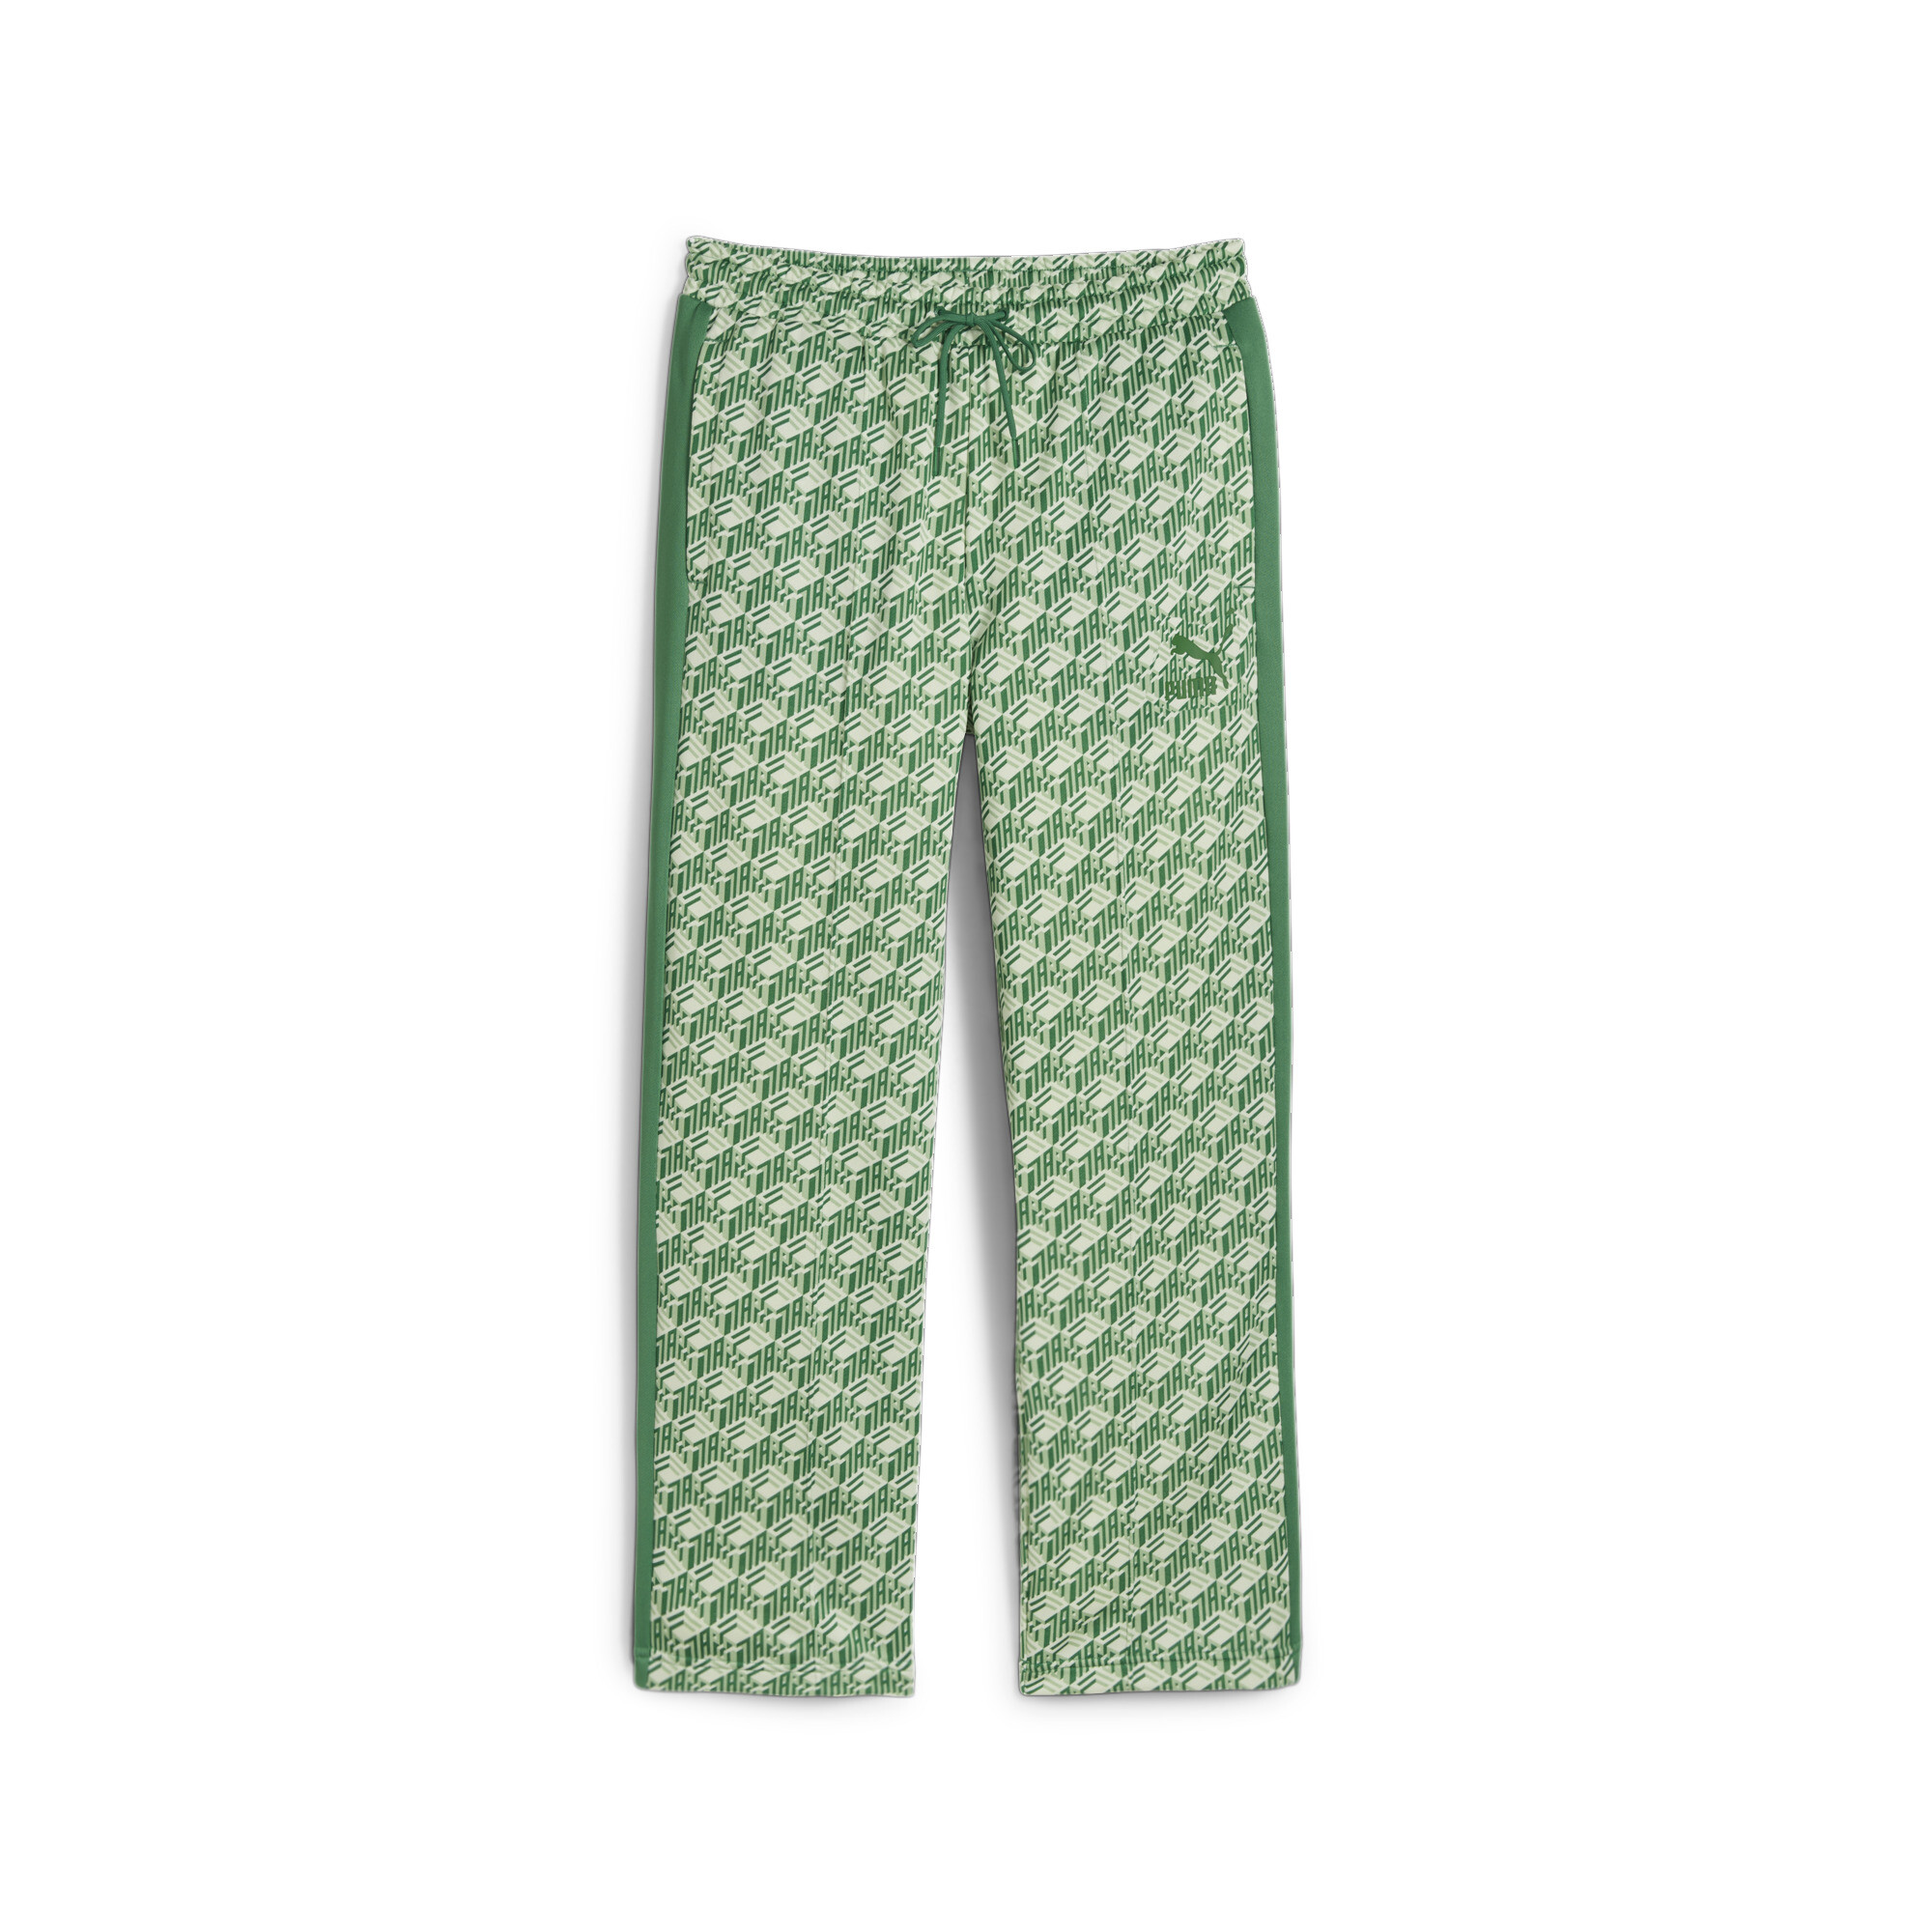 Men's PUMA T7 Straight Track Pants In Green, Size Medium